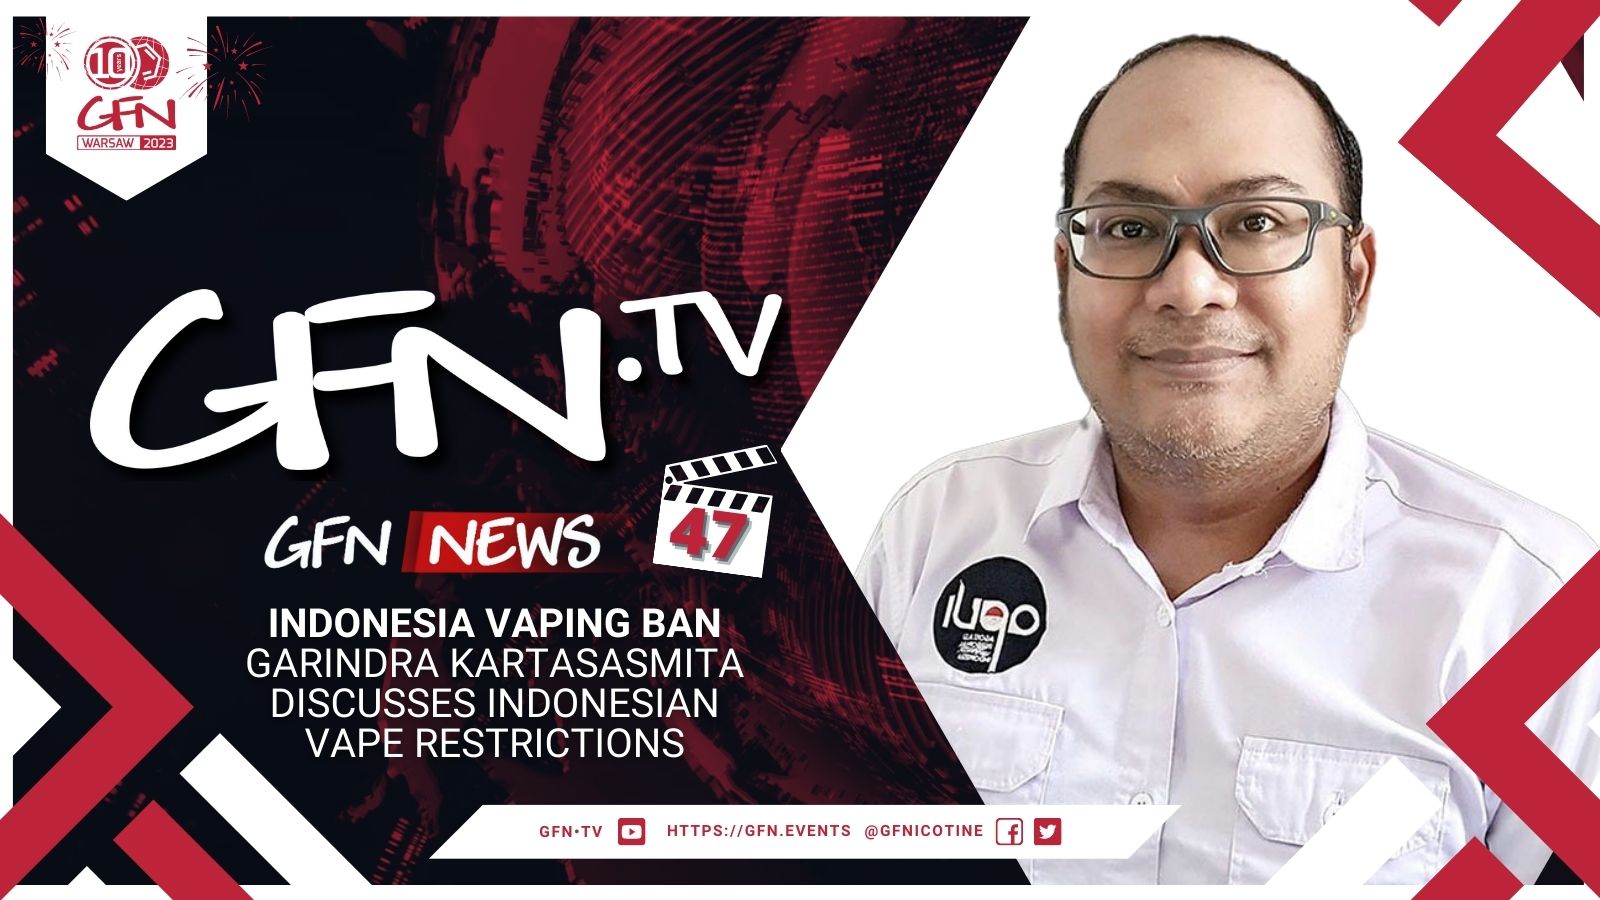 GFN News #47 | INDONESIA VAPING BAN | Garindra Kartasasmita discusses Indonesian vape restrictions